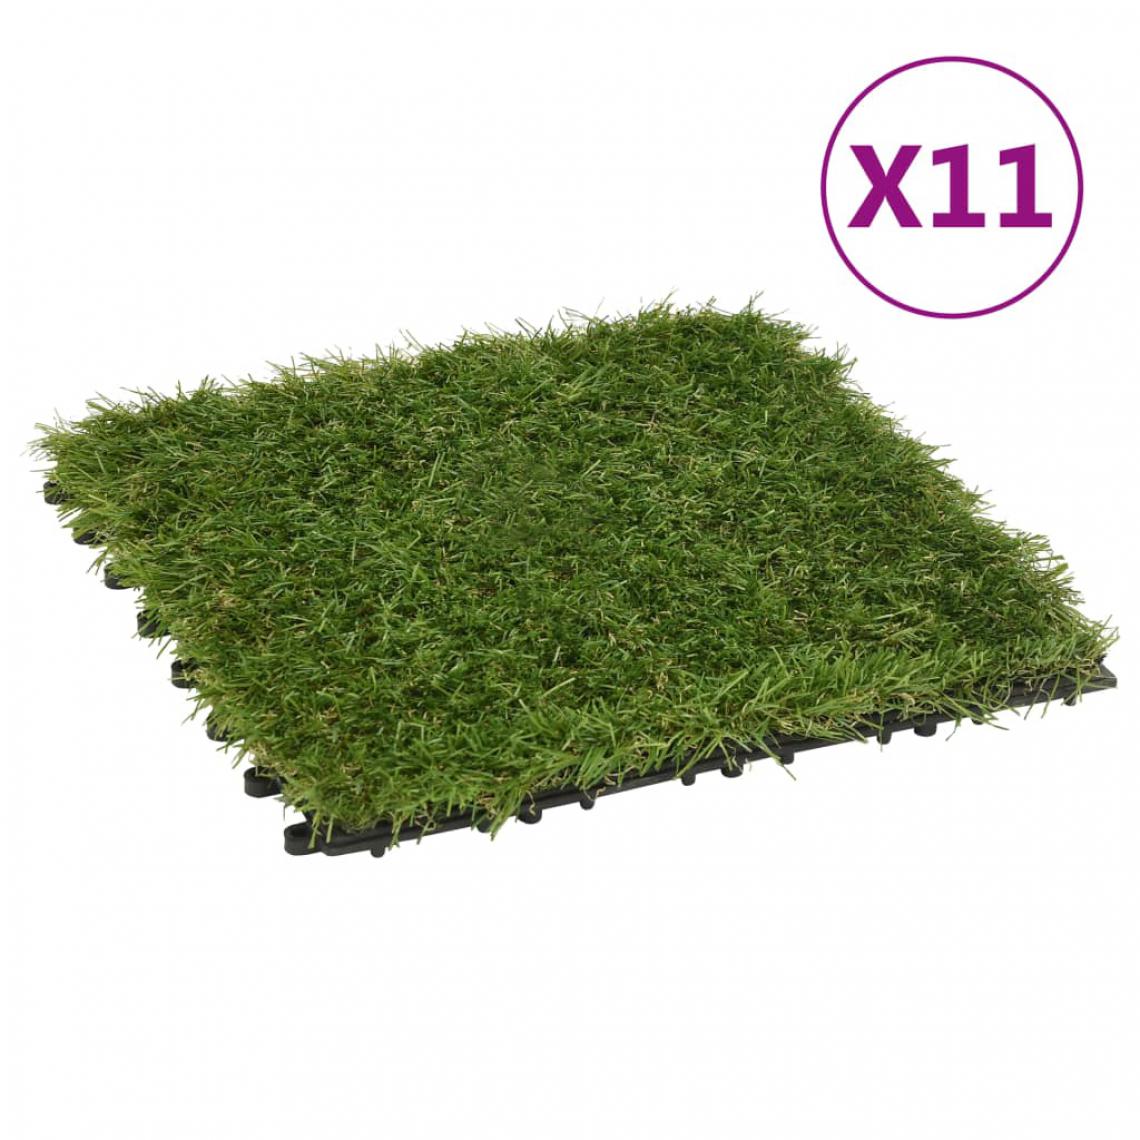 Vidaxl - vidaXL Carreaux de gazon artificiel 11 pcs Vert 30x30 cm - Plantes et fleurs artificielles